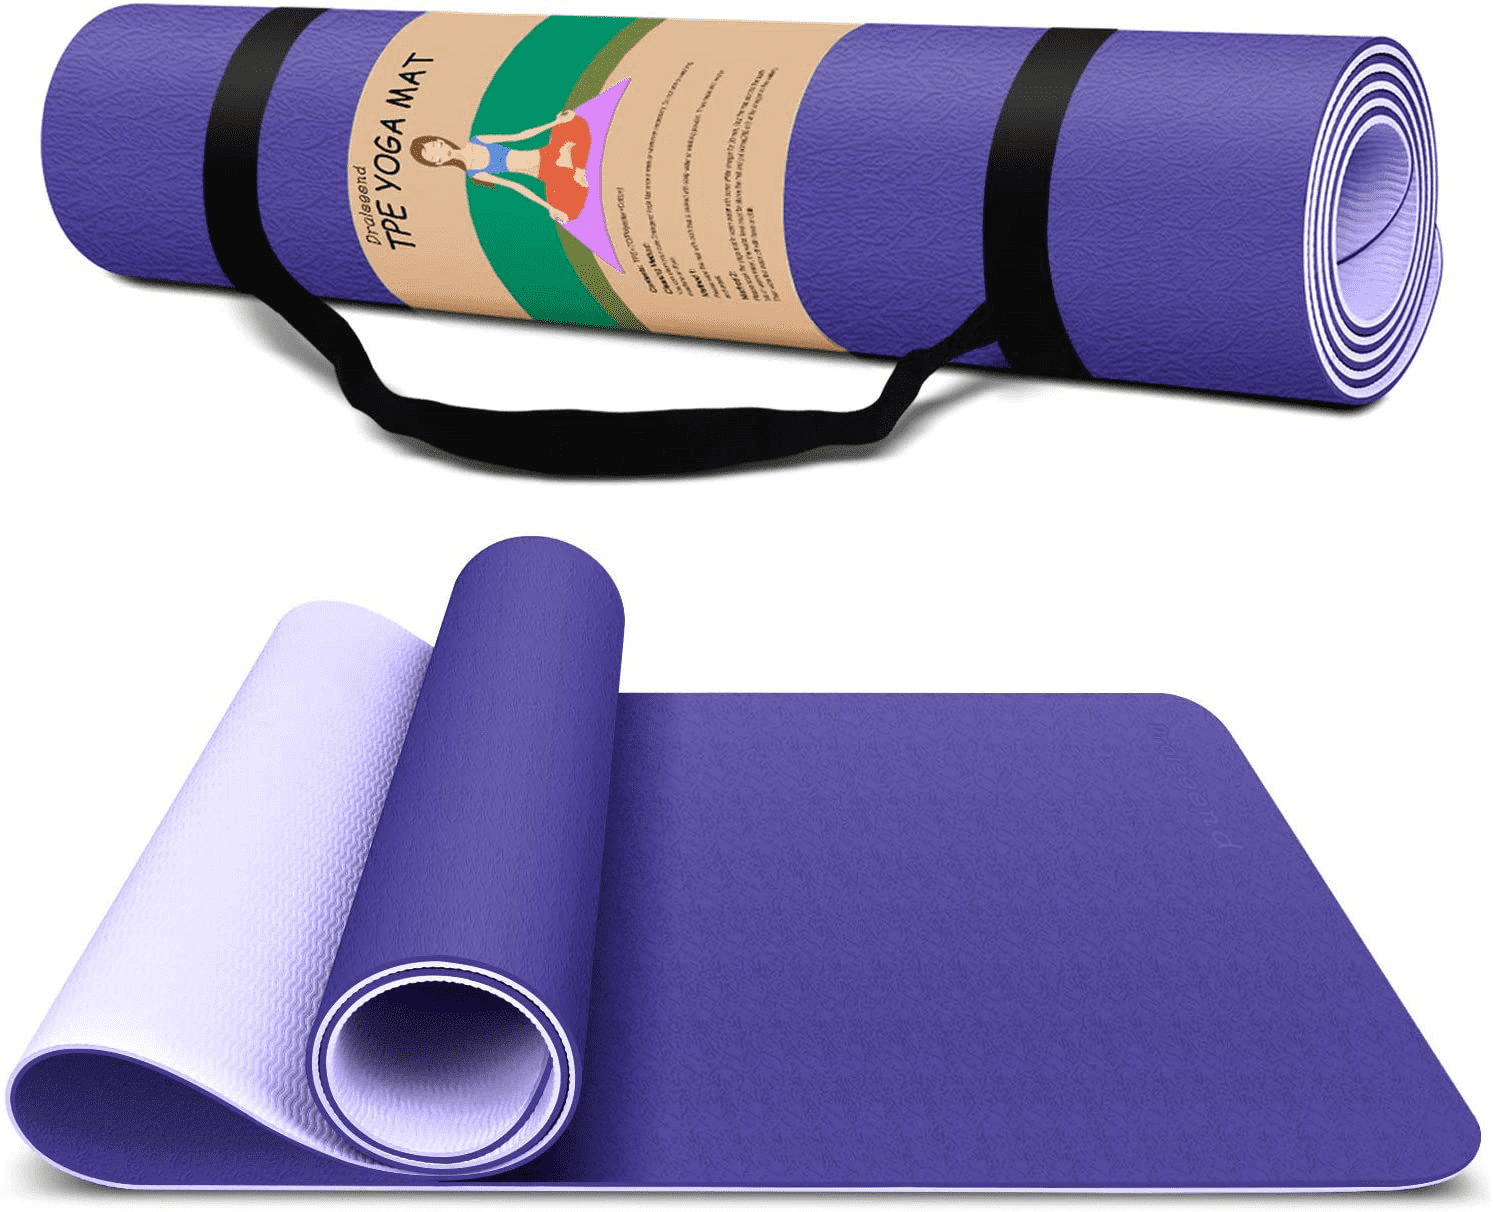 Waterproof Sport Mat for Pilates Exercise Non-Slip Fitness Yoga Mat Purple US 